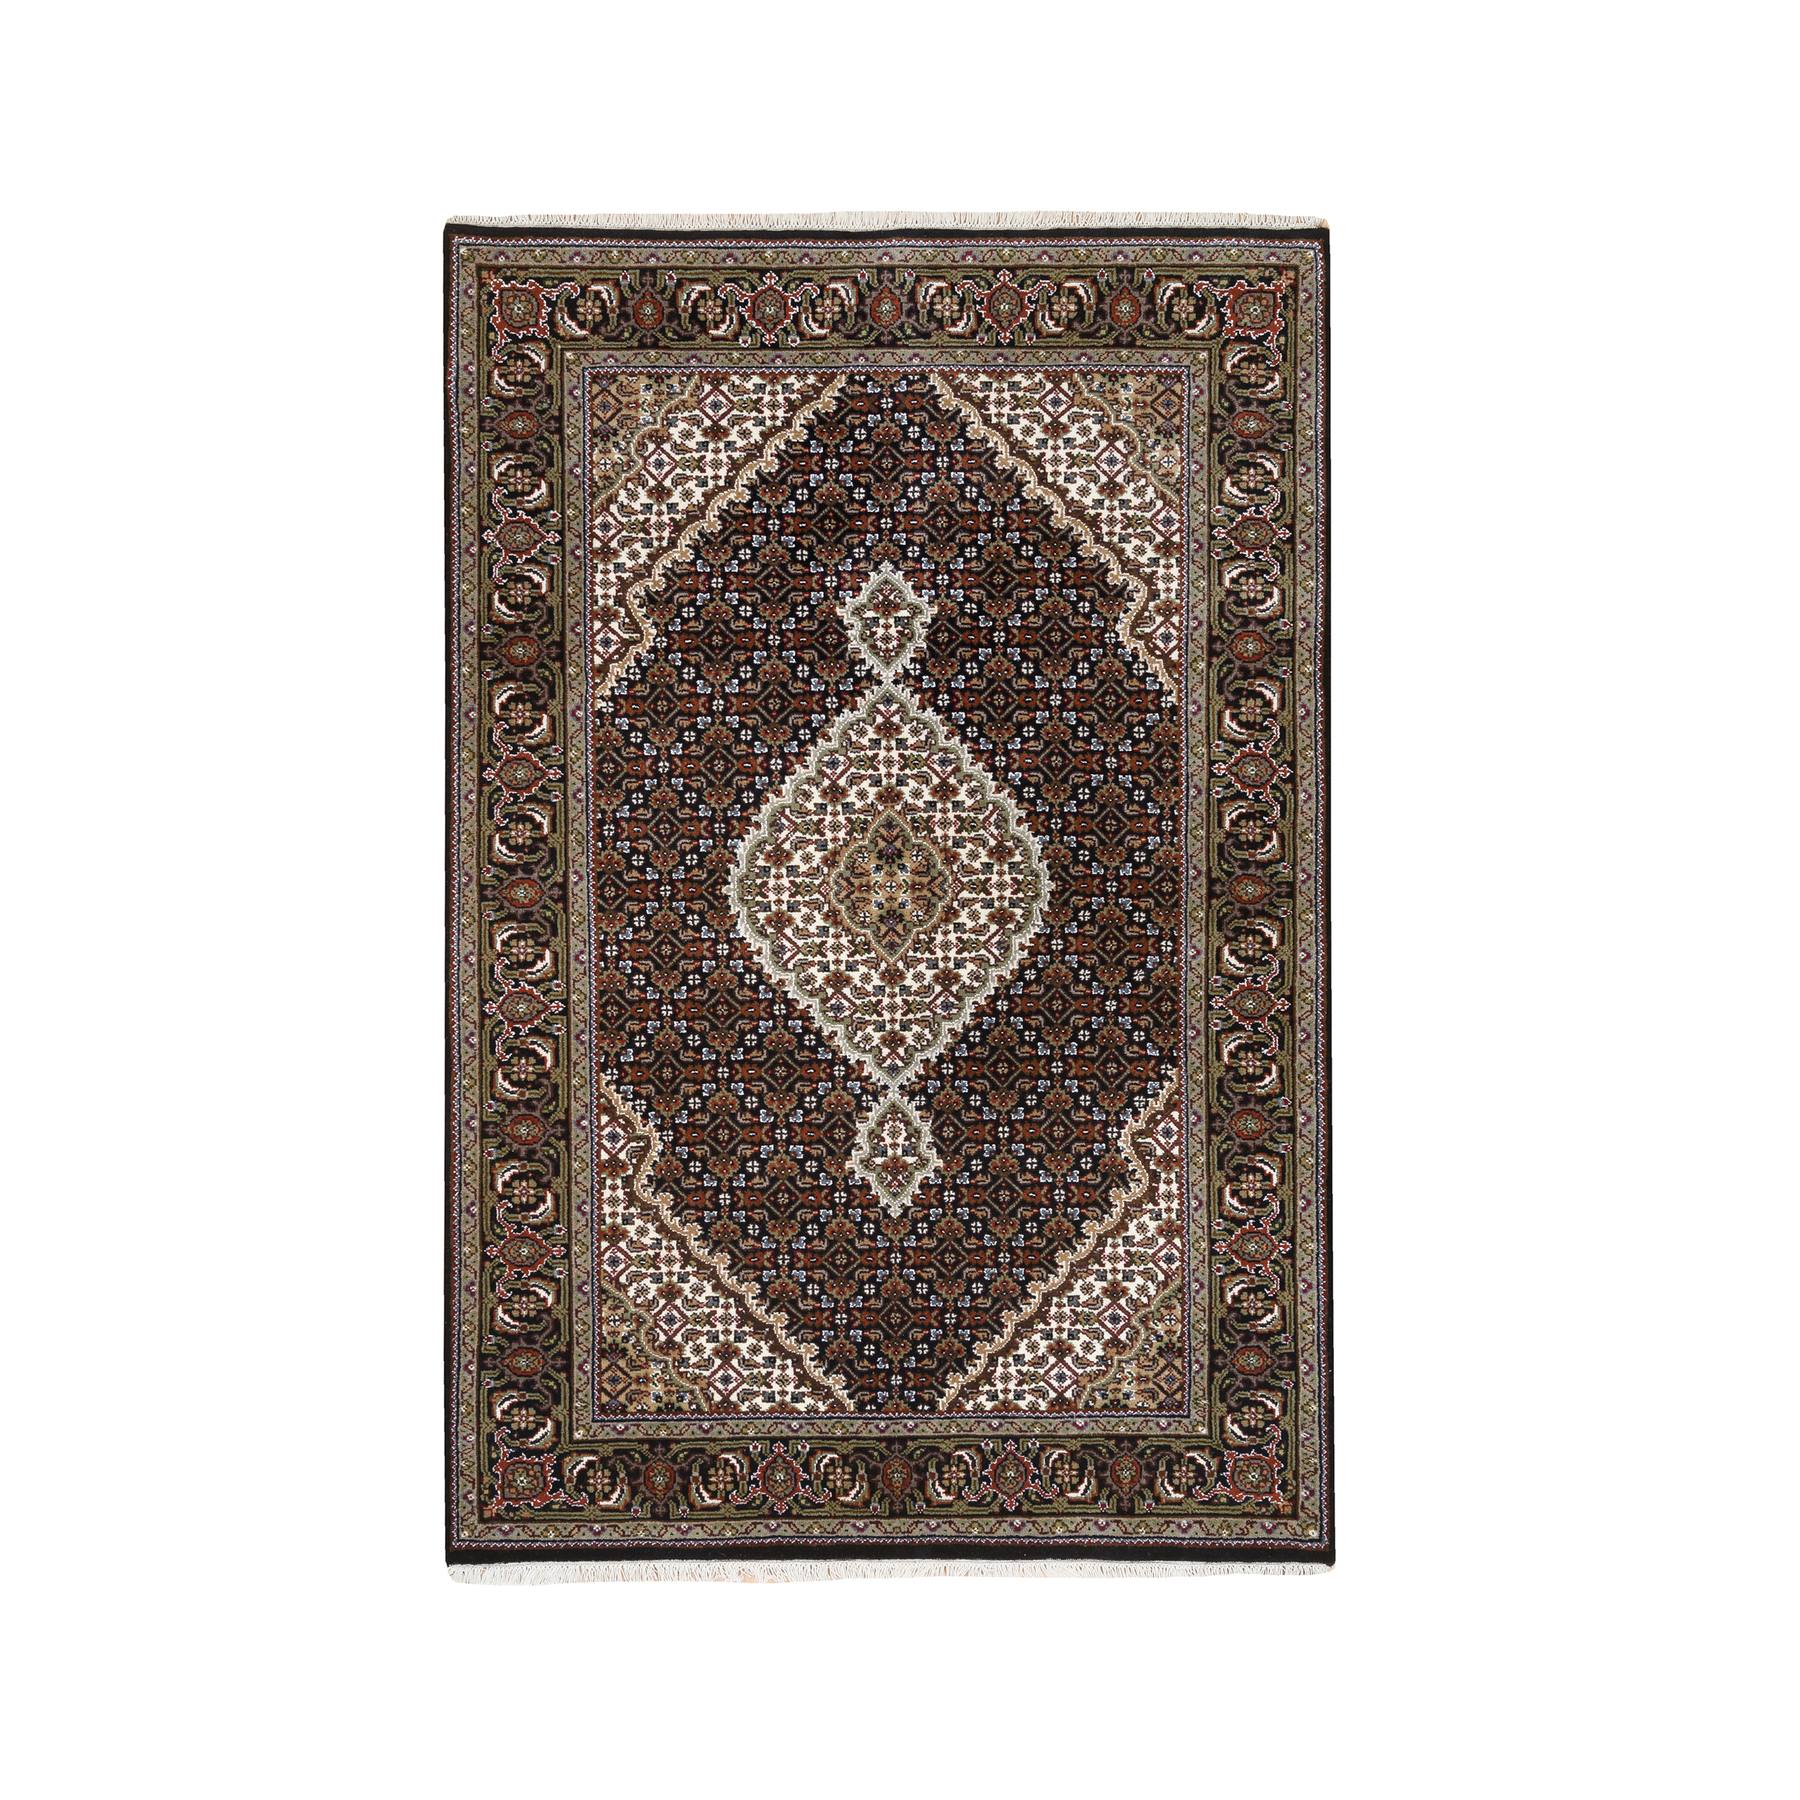 4'x6'3" Rich Black Tabriz Mahi with Fish Medallion Design Wool and Silk 175 KPSI Hand Woven Oriental Rug 